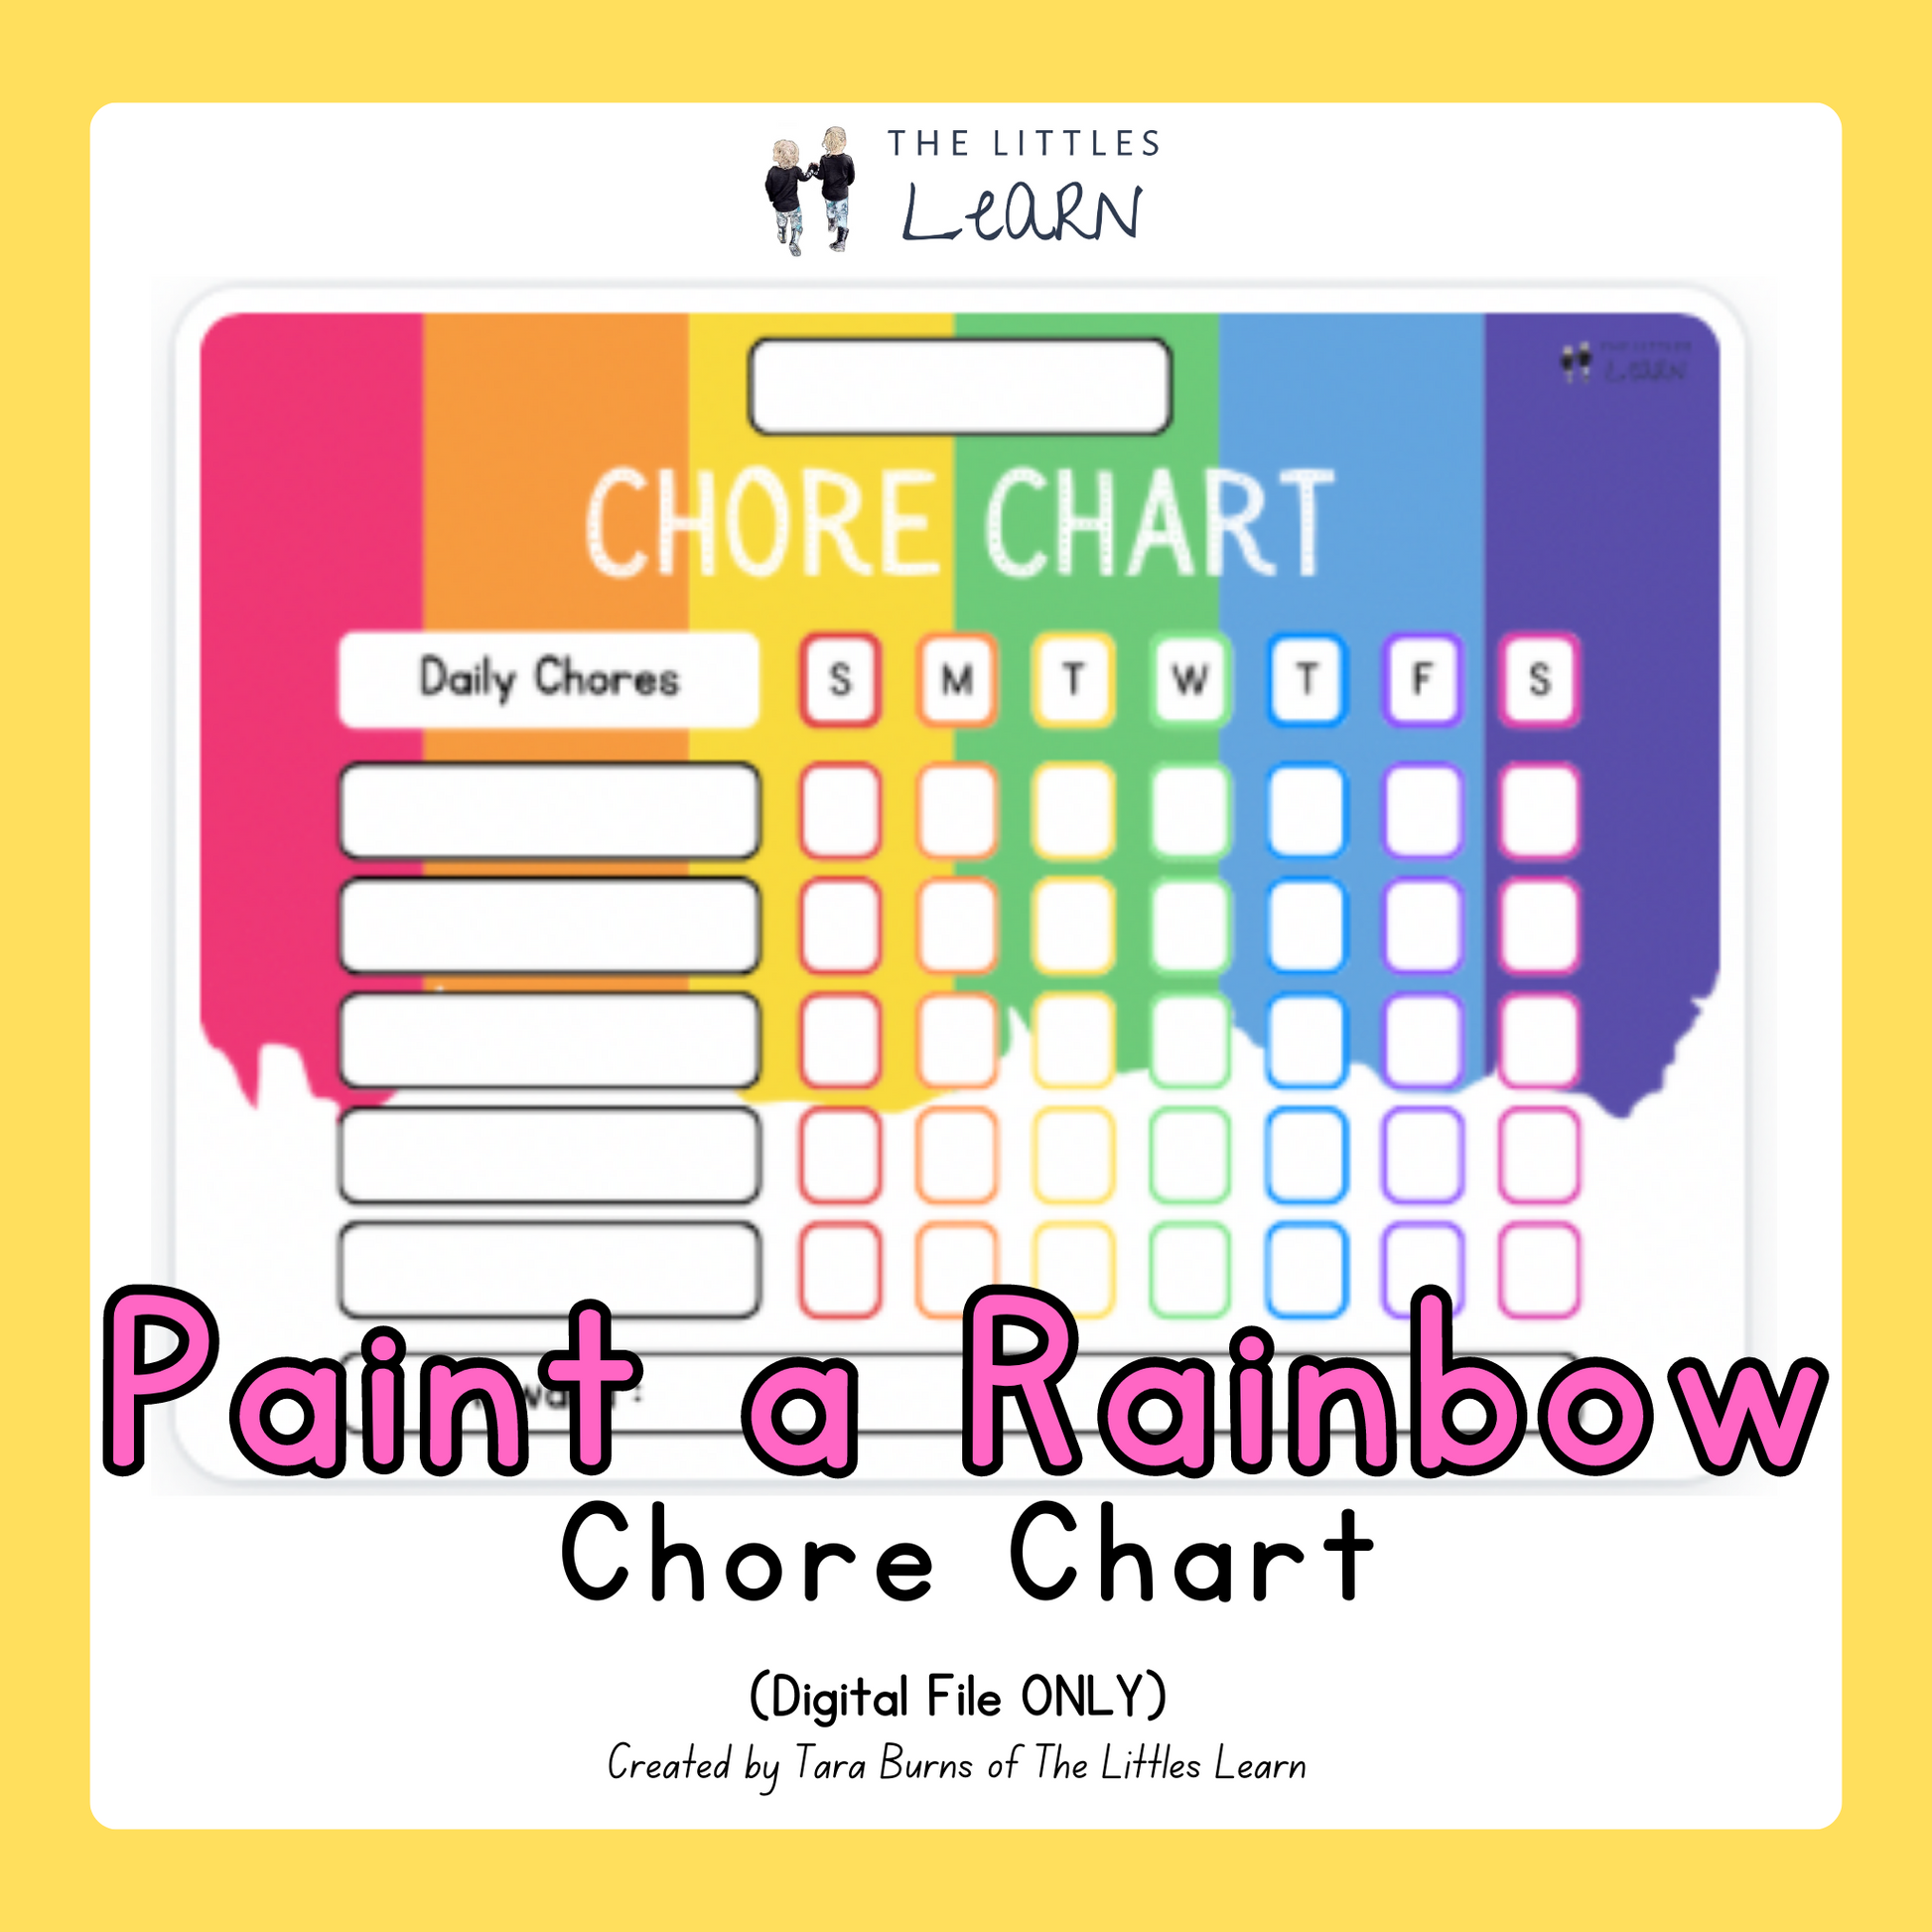 A fun chore chart with a bright bold rainbow paint drip design.